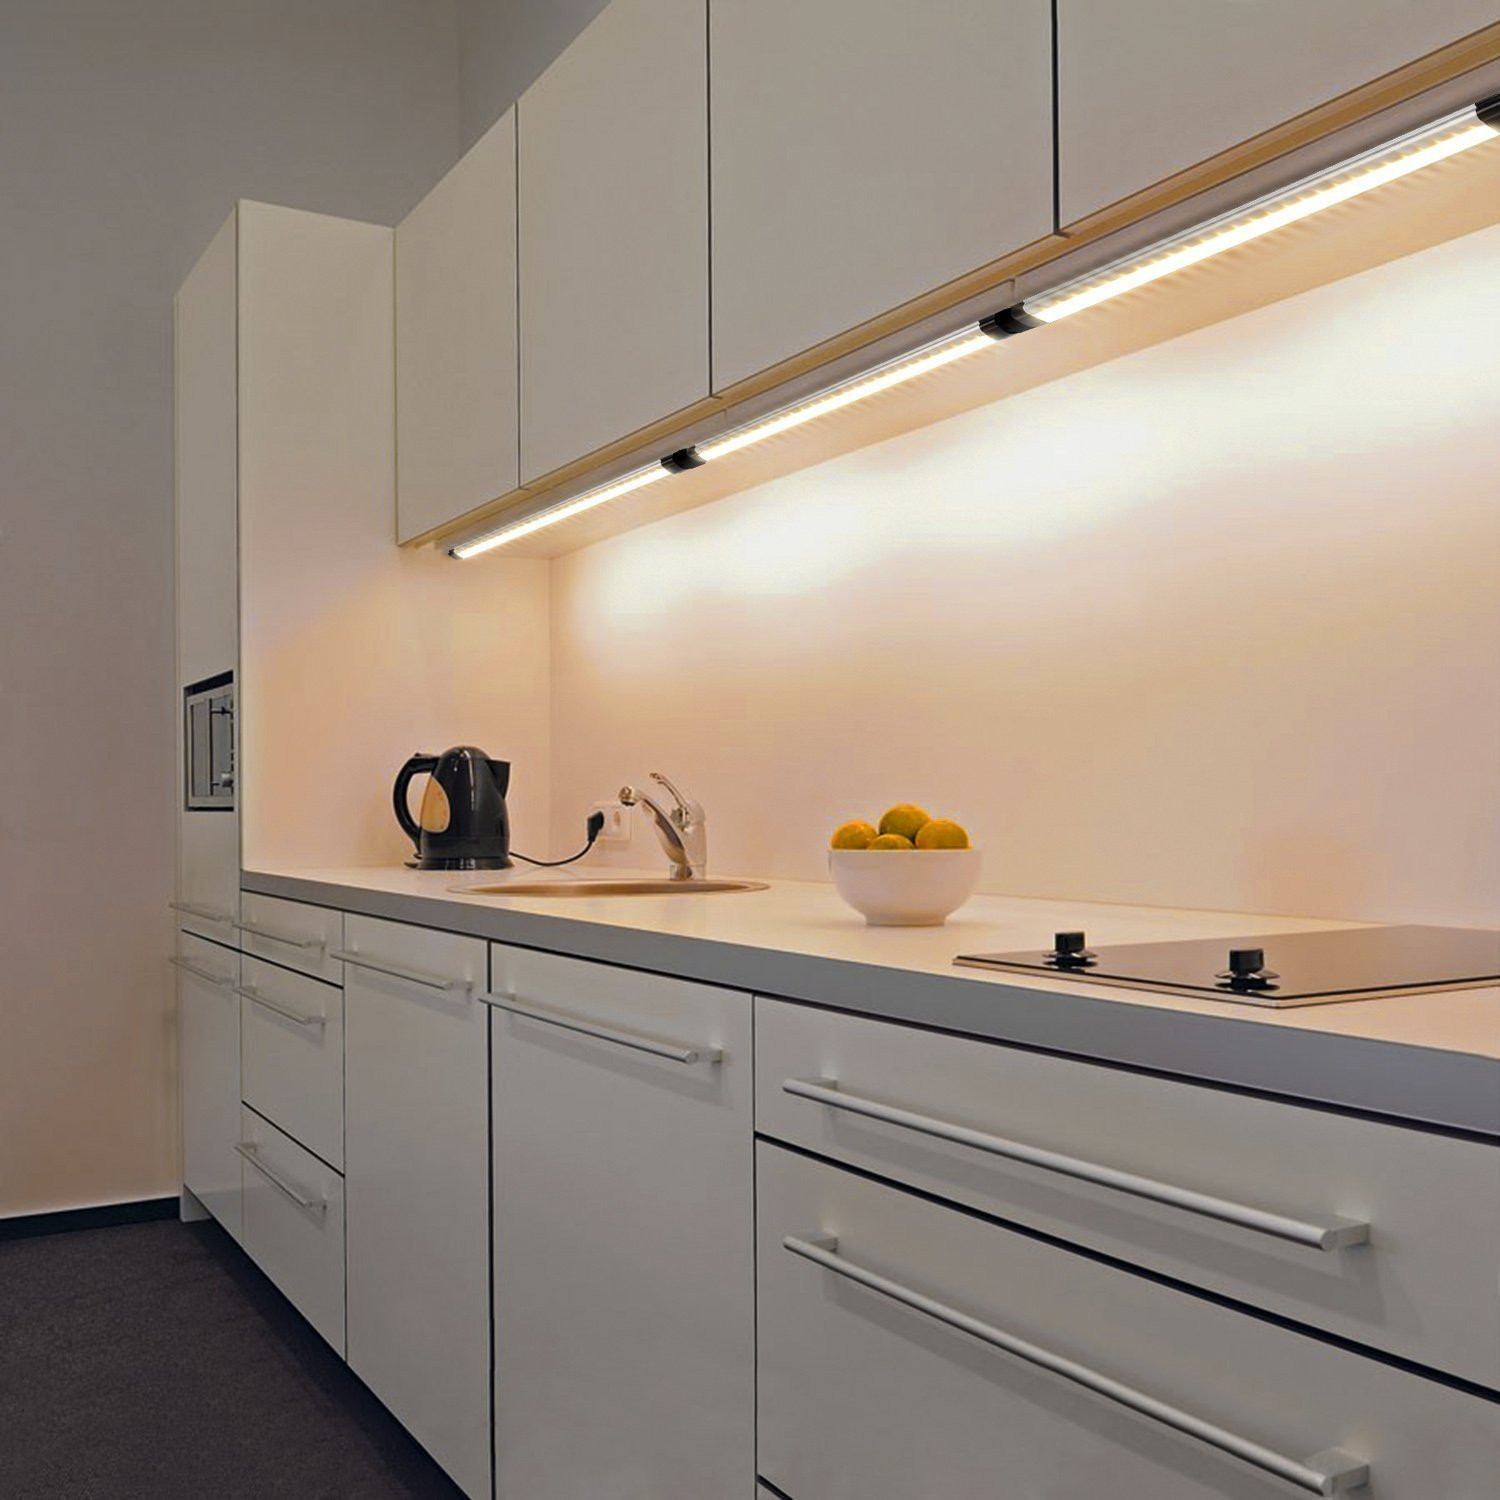 Led Lighting Under Cabinet Kitchen
 Galleon Albrillo LED Under Cabinet Lighting Dimmable